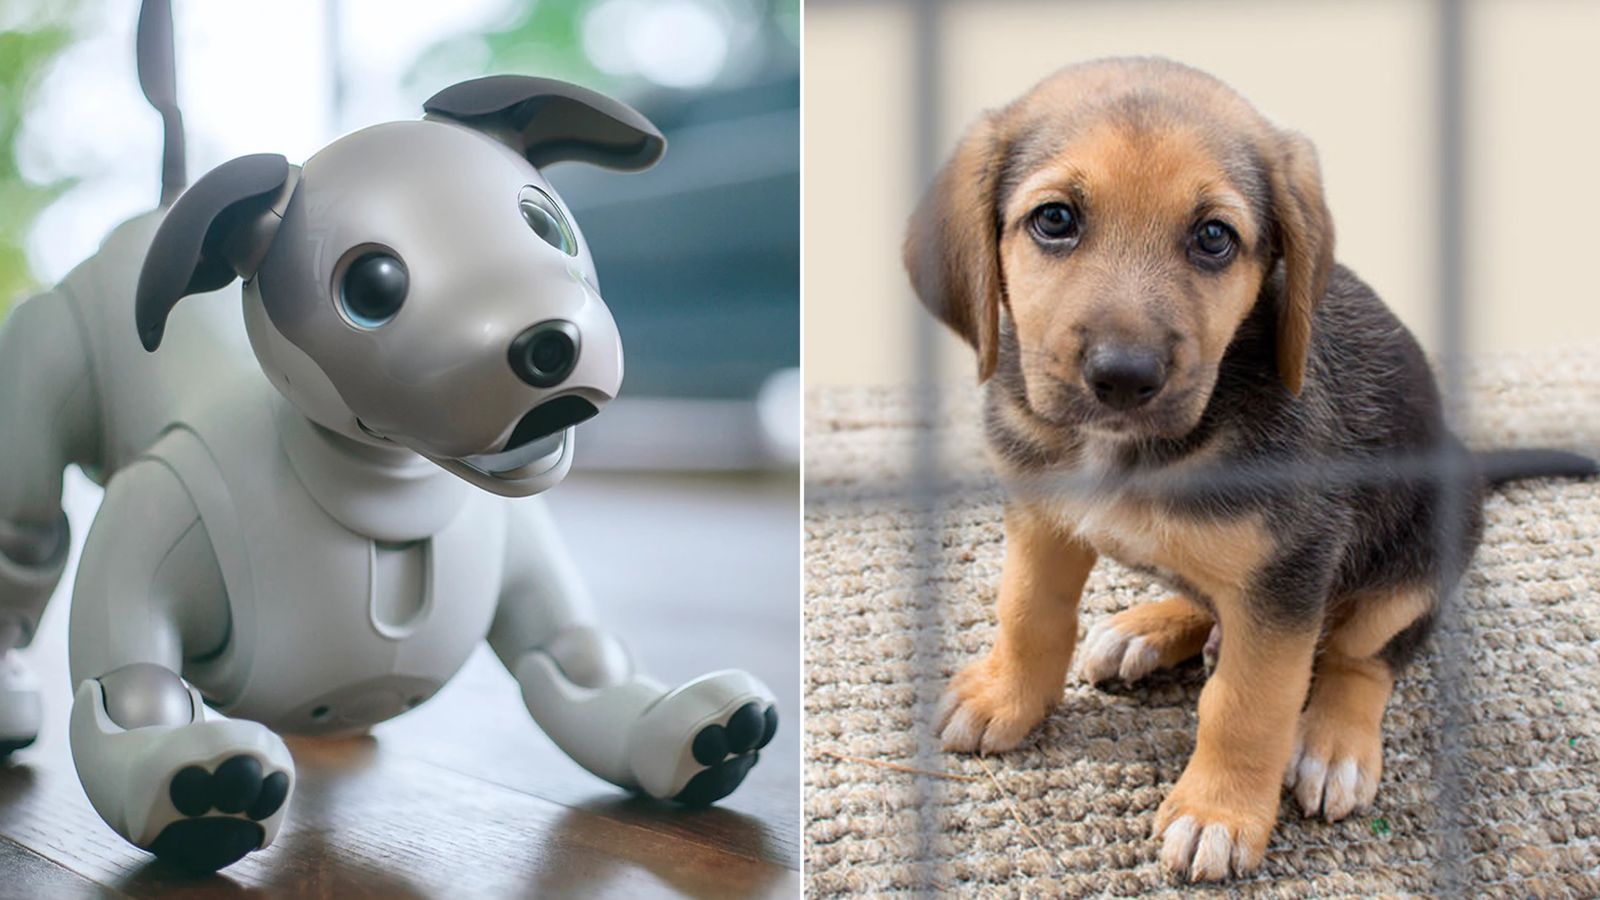 Who's the best boy? Robot pupper v real doggo, Science & Tech News